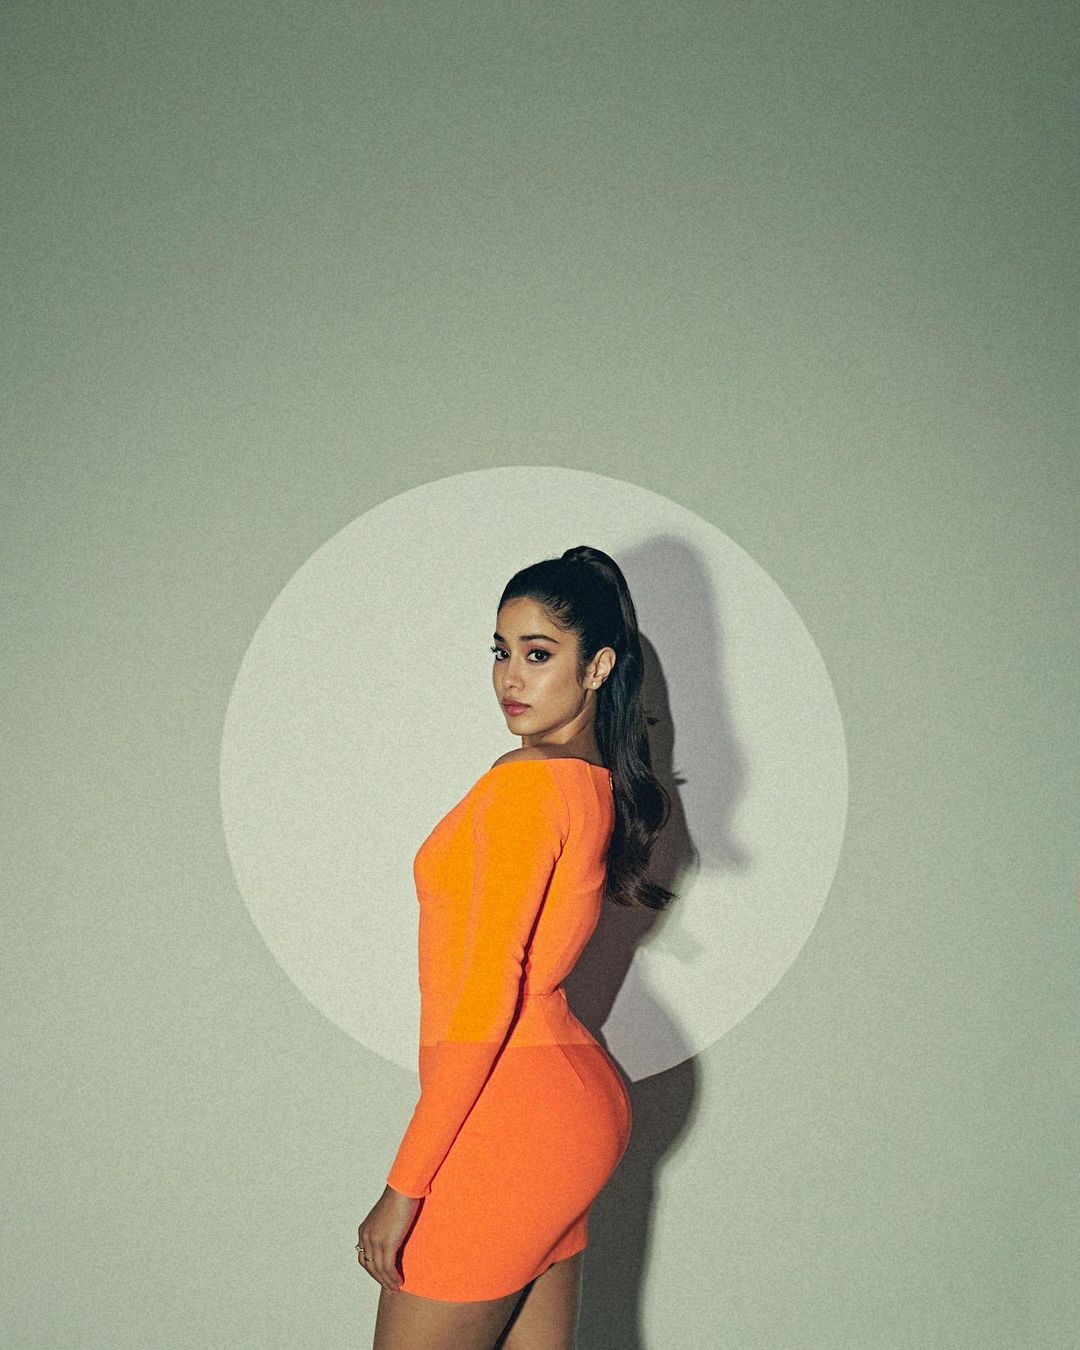 Janhvi Kapoor flaunts her curves in the orange bodycon dress